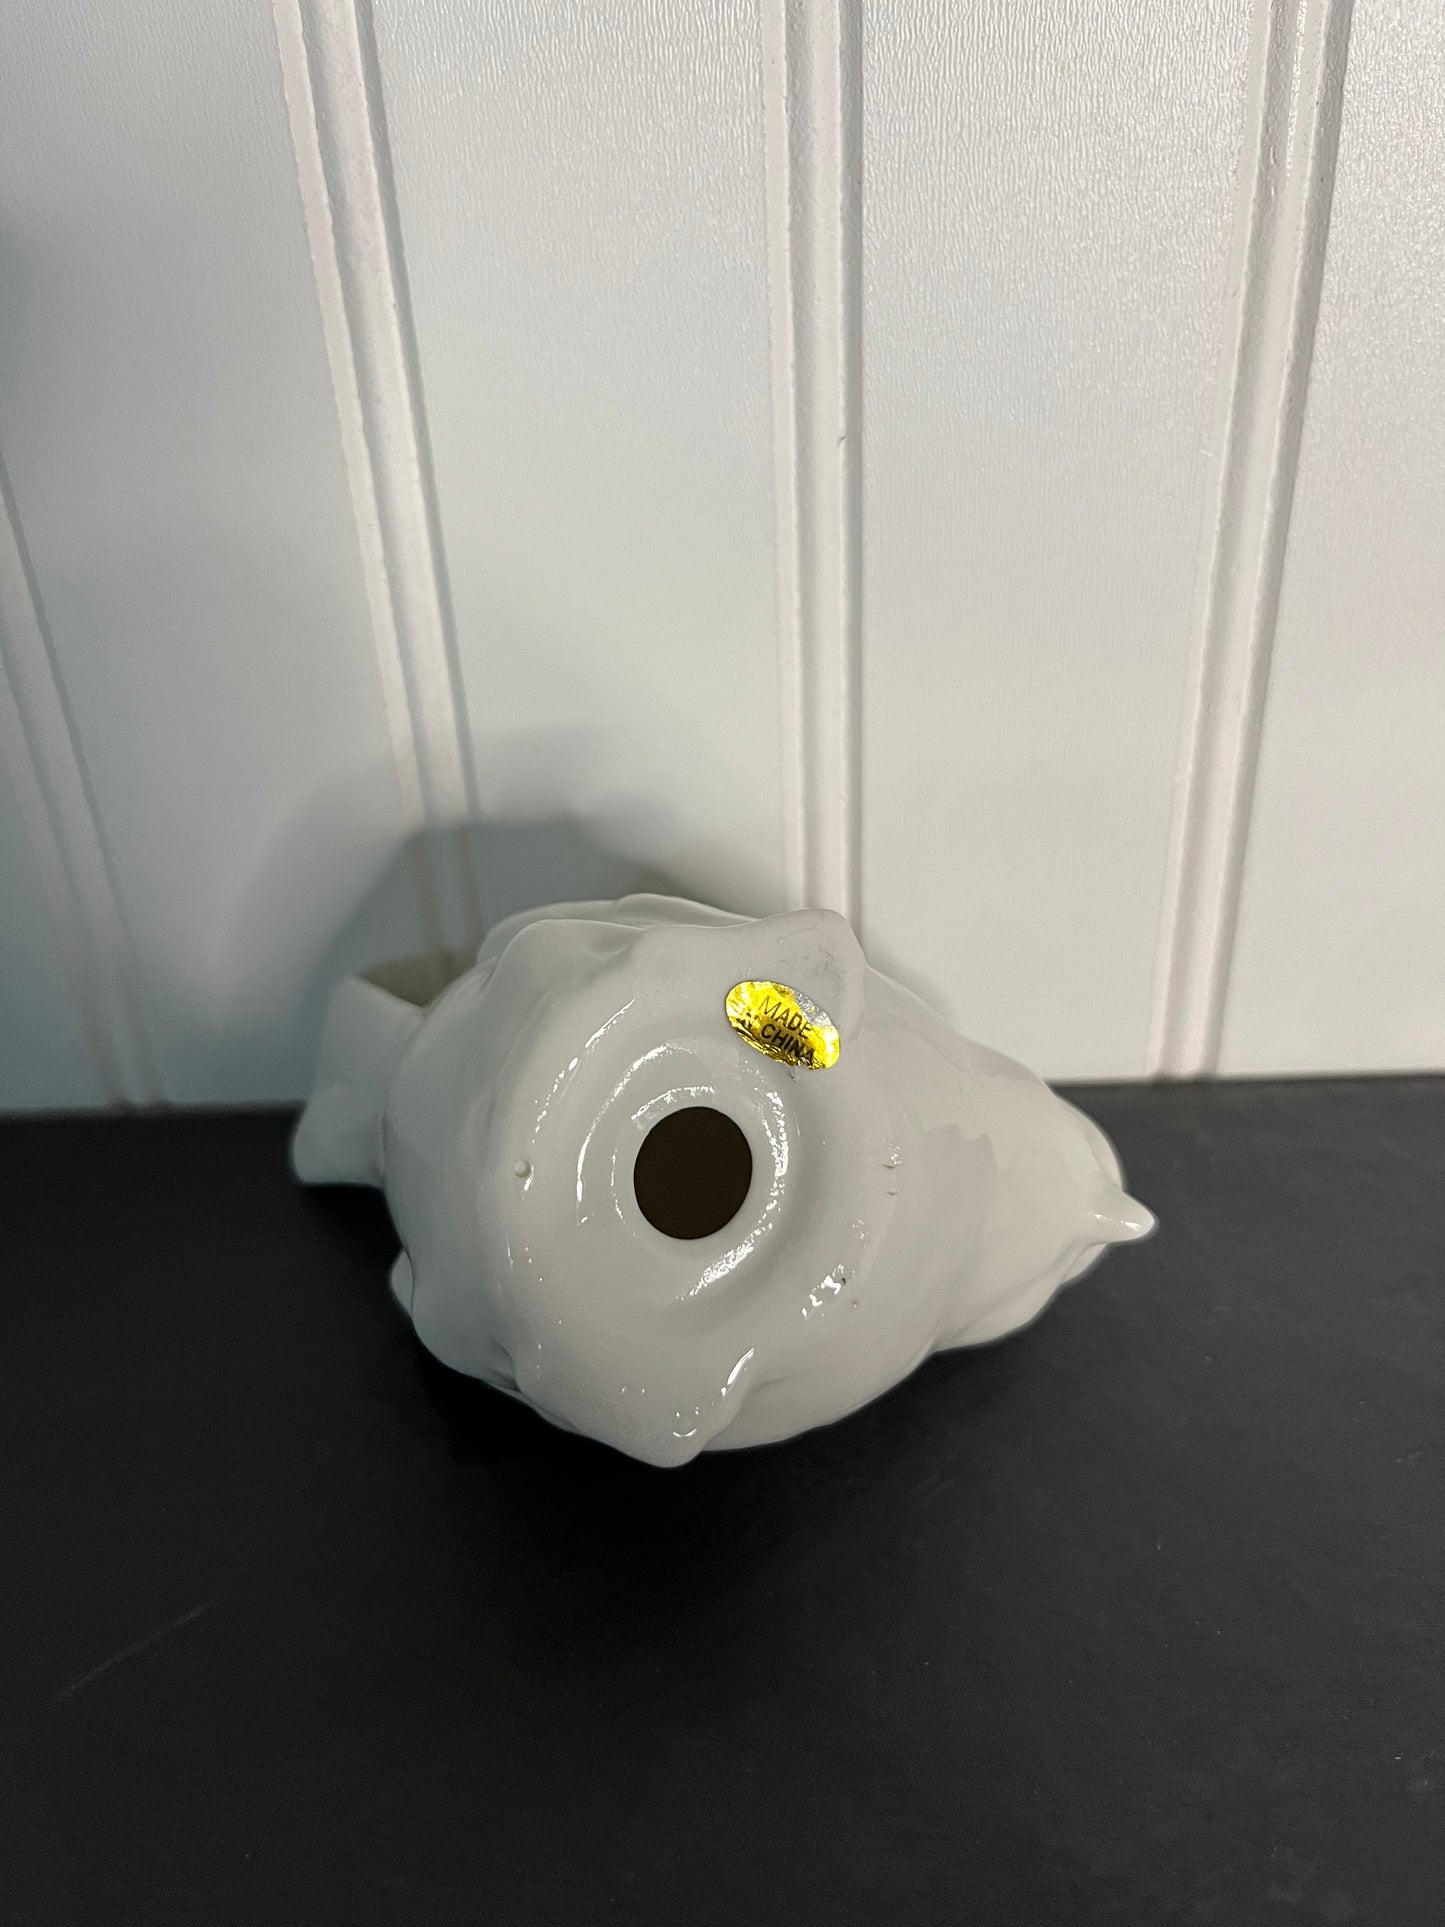 Cracker Barrel Ceramic White Bird Figurine - Charming Decorative Accent